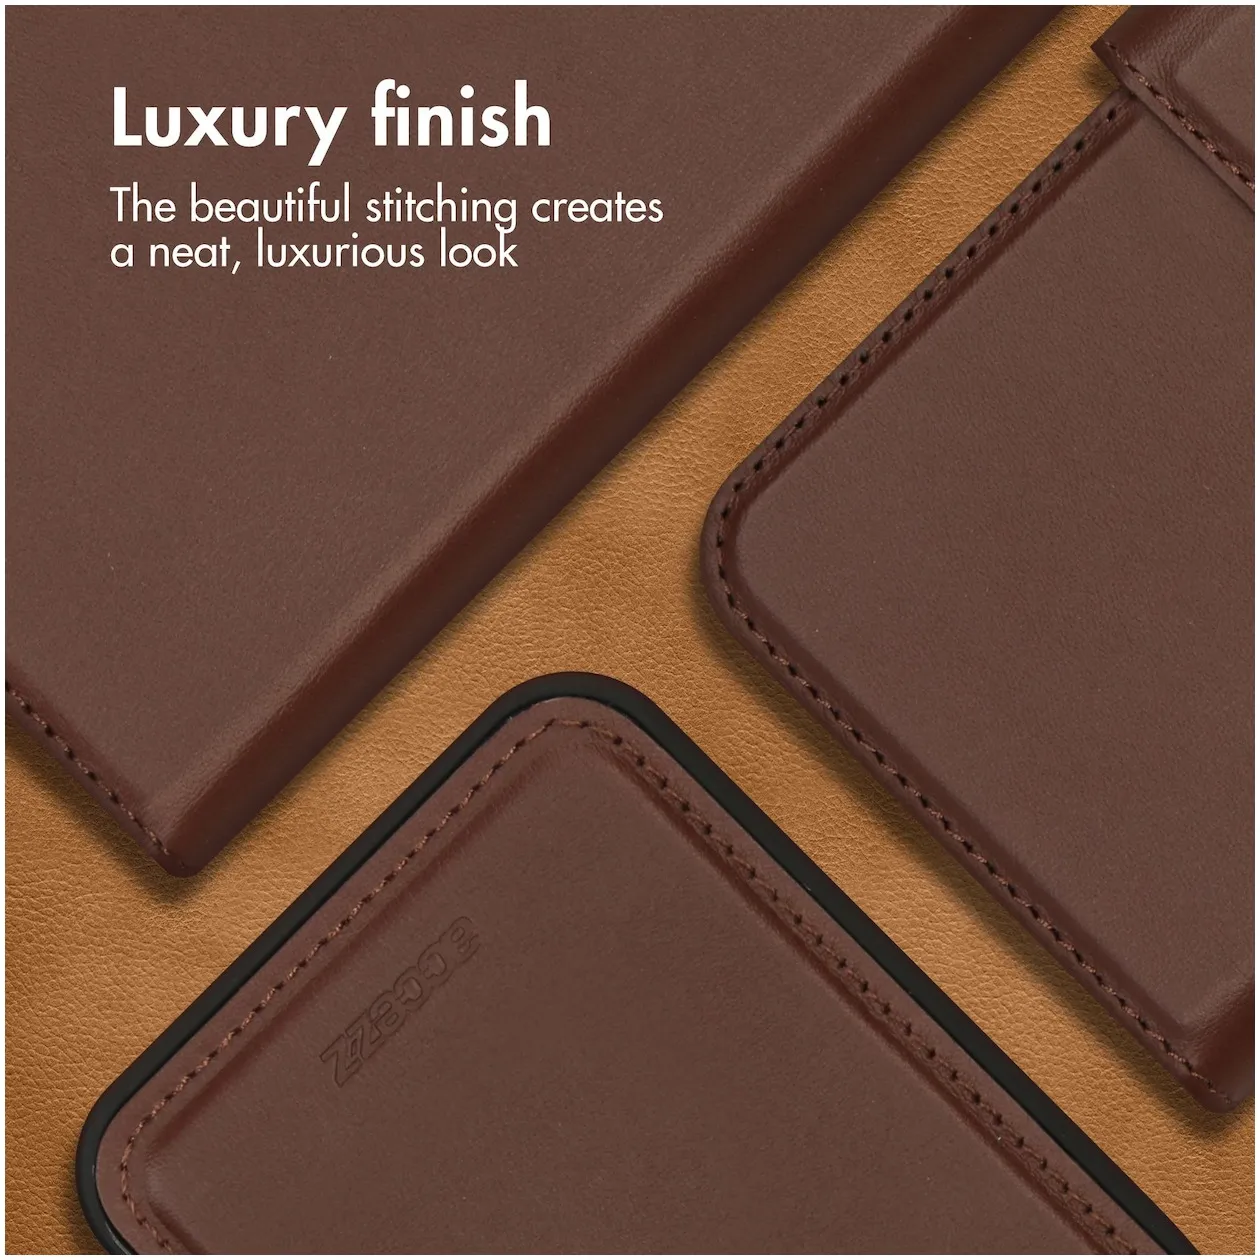 Accezz Premium Leather 2 in 1 Wallet Book Case voor  Samsung Galaxy A33 Bruin